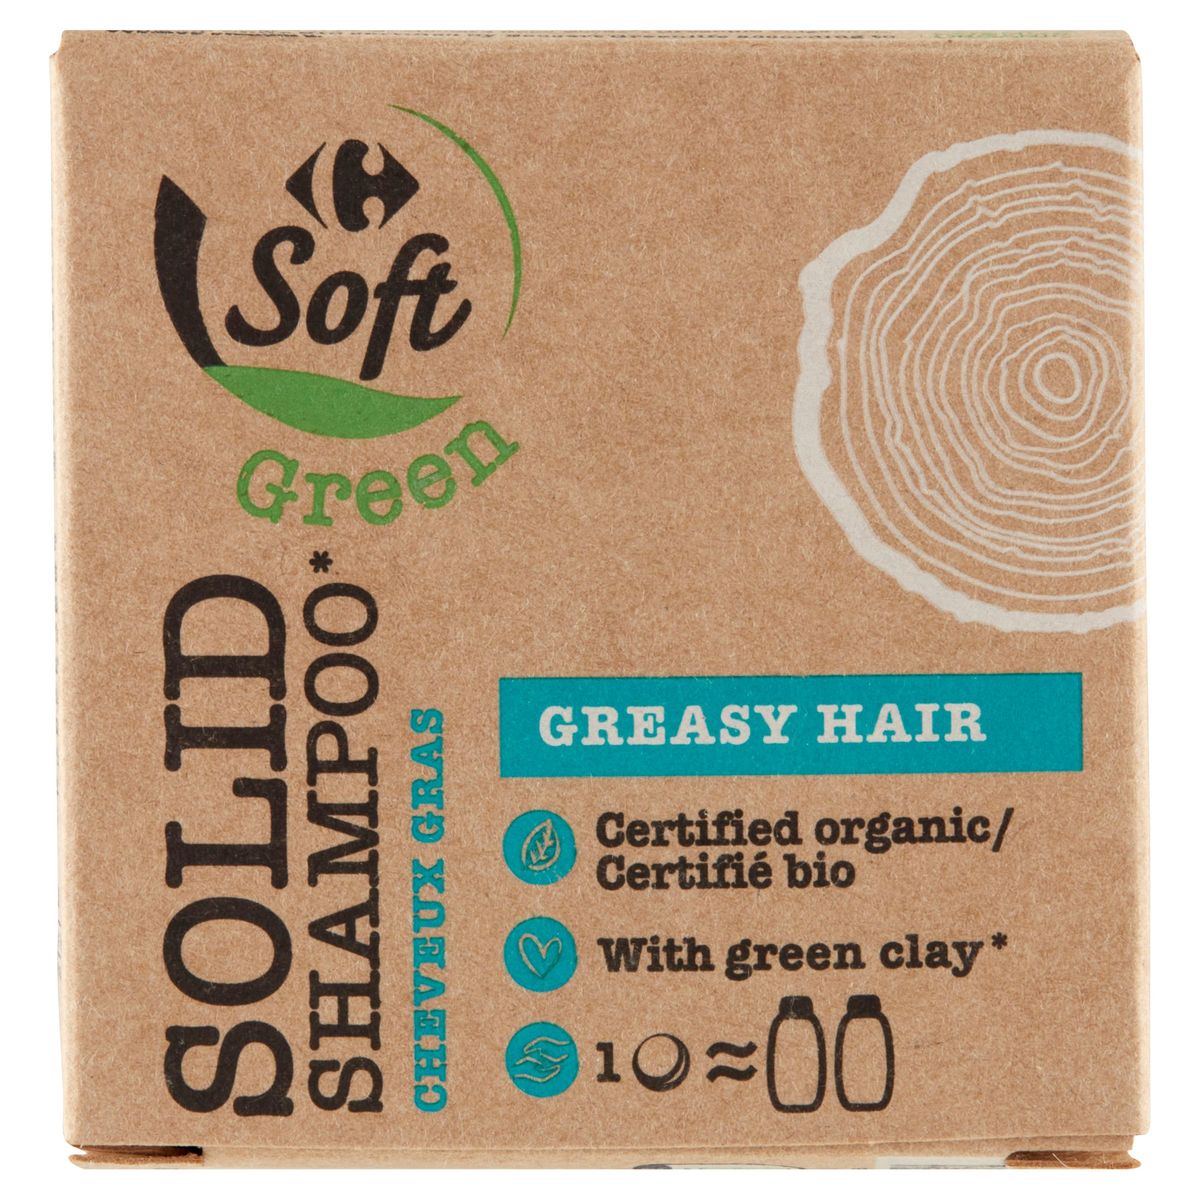 Carrefour Soft Green Solid Shampoo Cheveux Gras 75 g